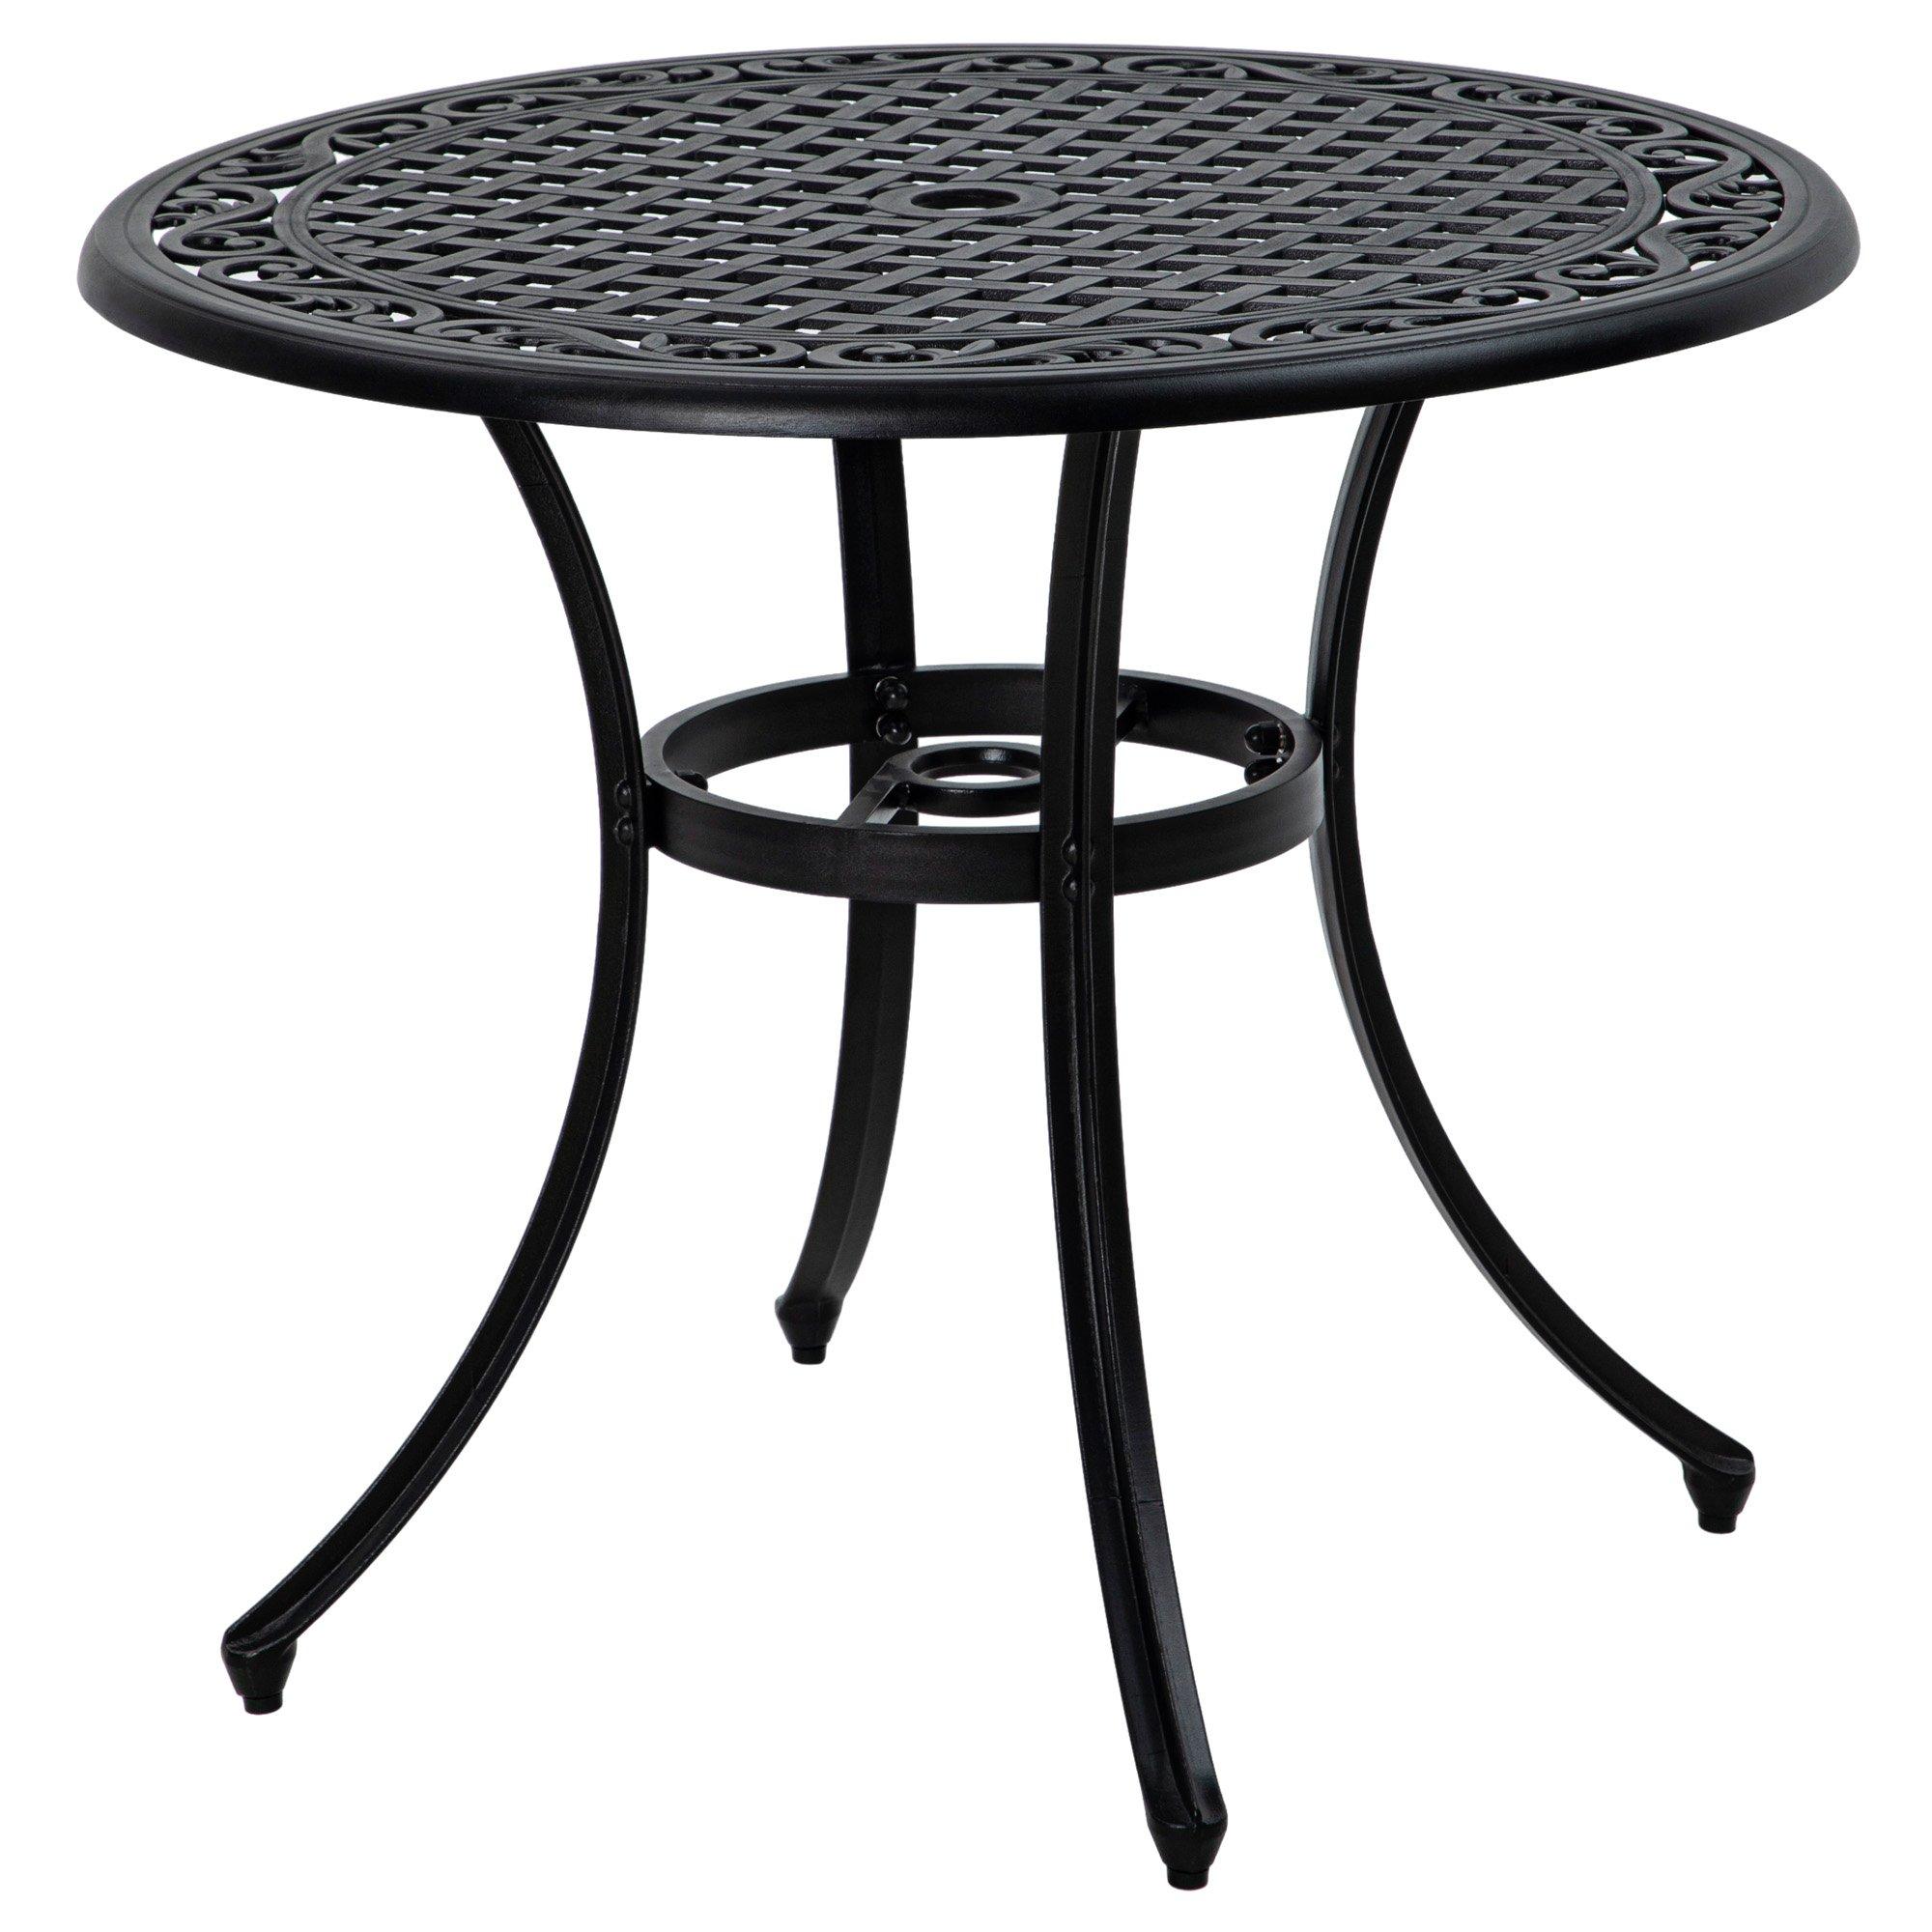 Garden Table with Parasol Hole for 2-4, Cast Aluminium Frame